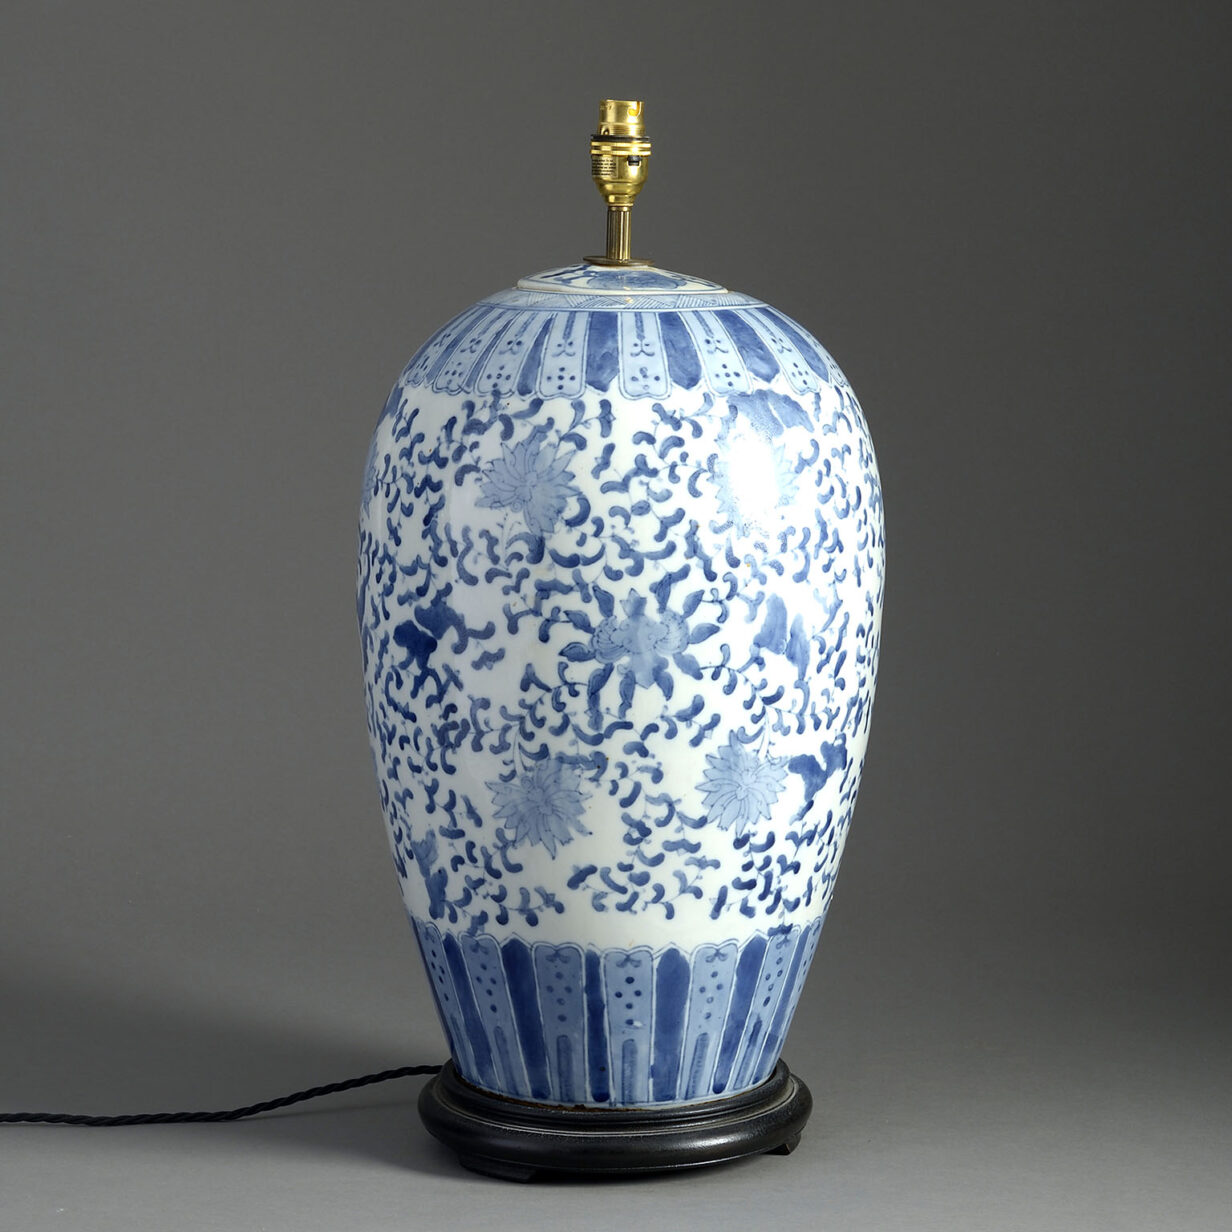 Blue and white porcelain jar lamp